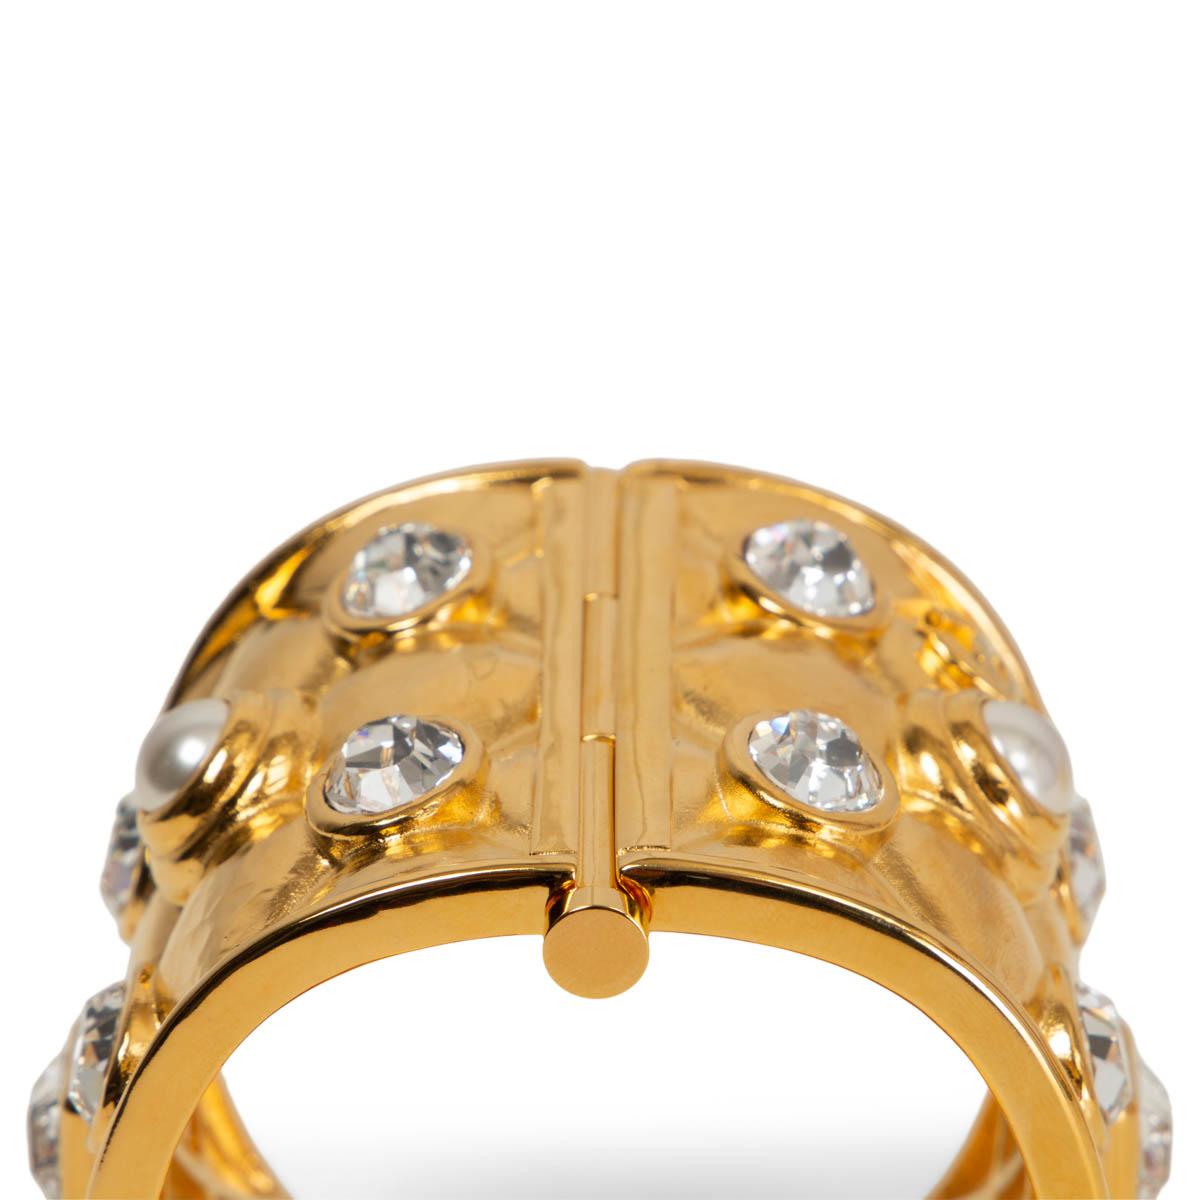 CHANEL gold-tone 2021 CRYSTAL & PEARL Cuff Bracelet 1